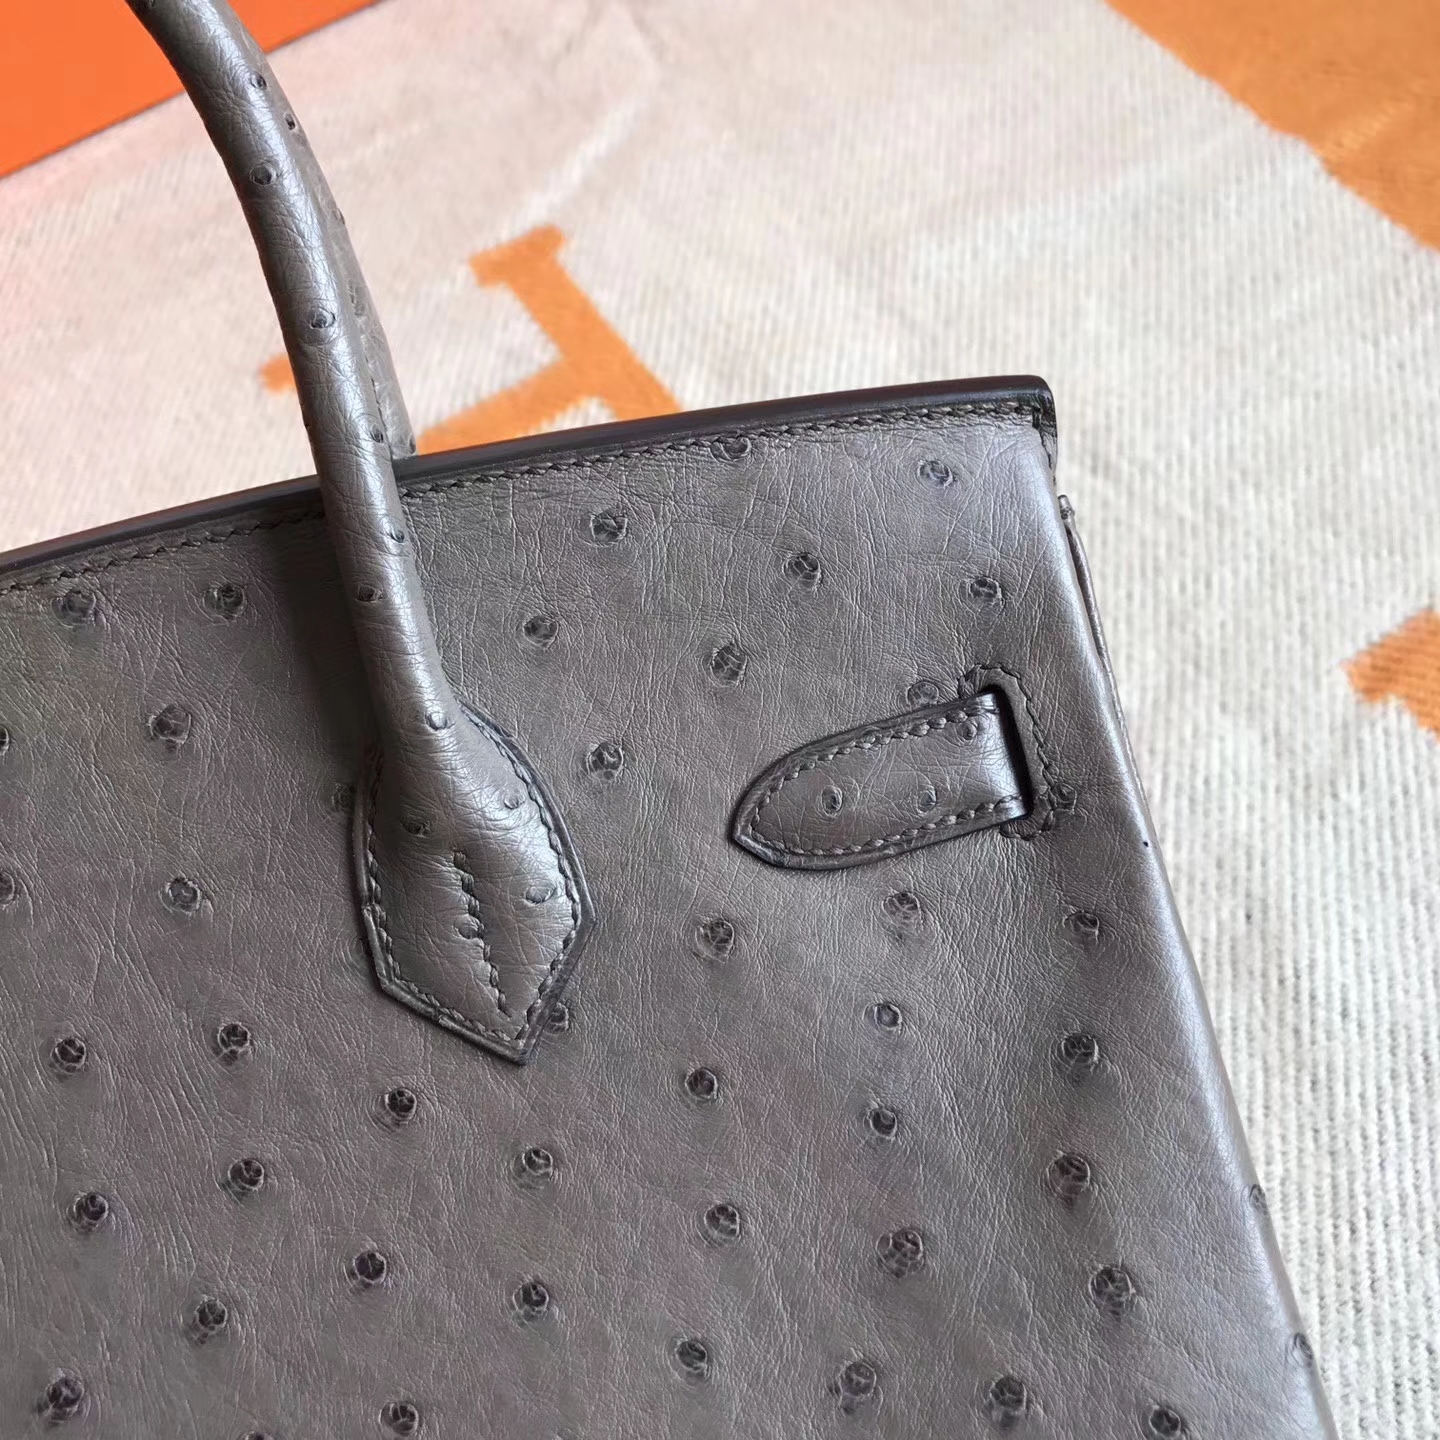 Fashion Hermes Ostrich Leather Birkin30cm Handbag in Mousse Grey Silver Hardware